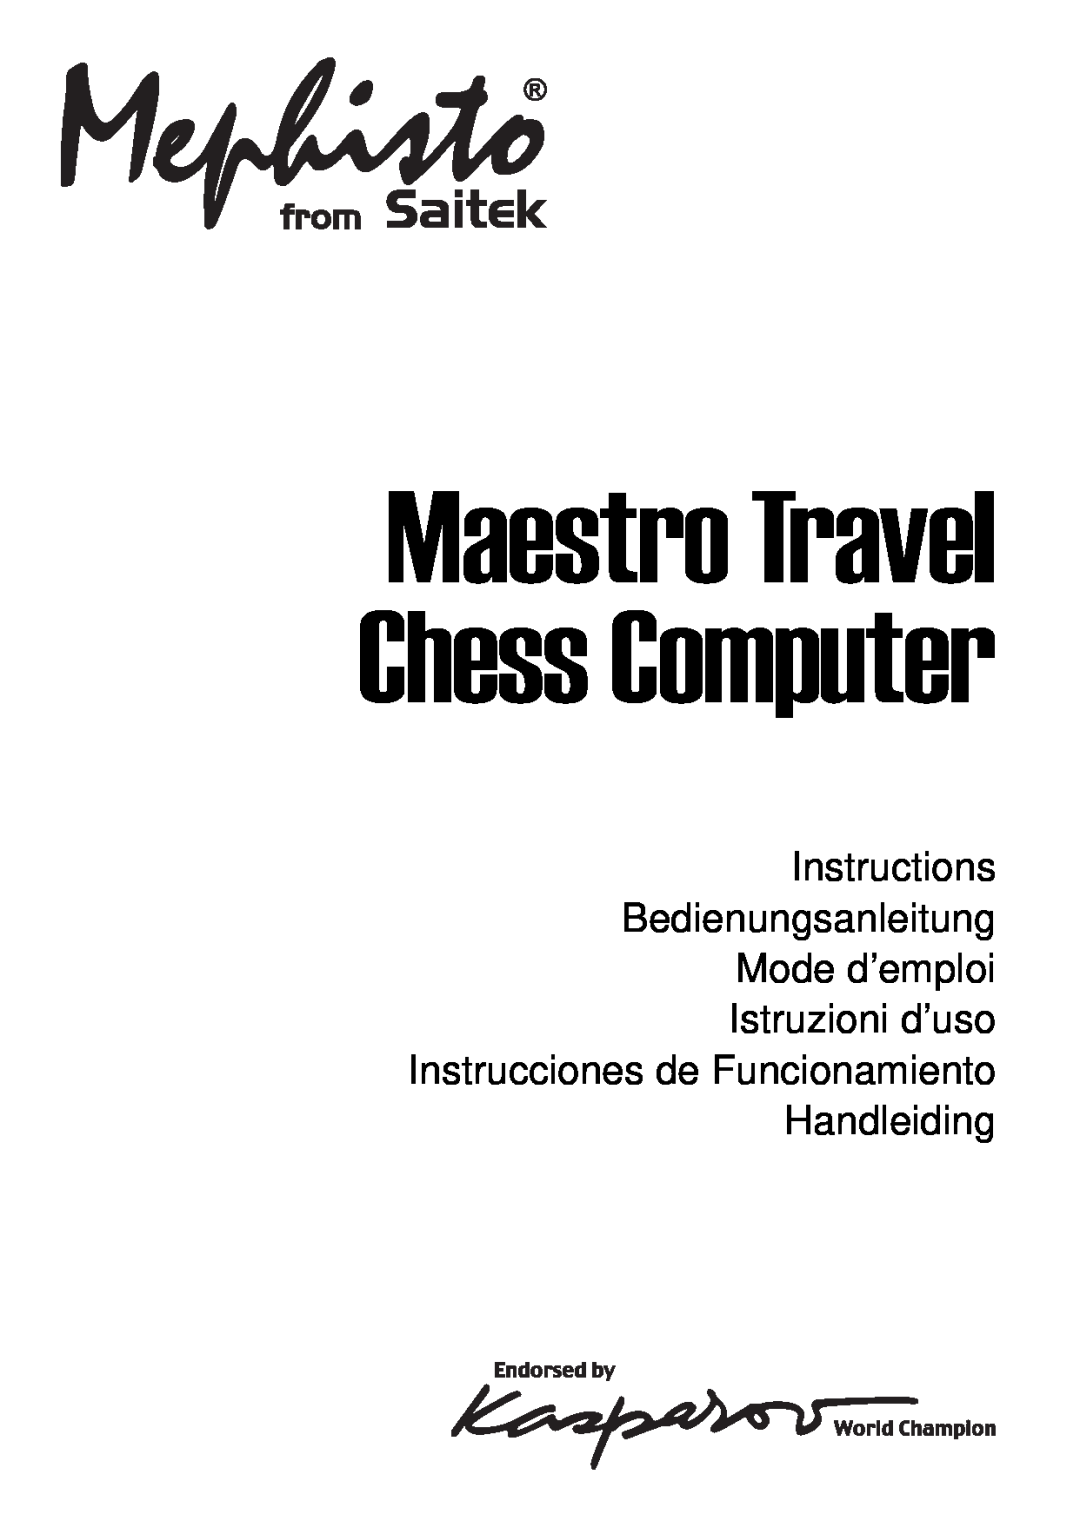 Saitek Maestro Travel Chess Computer manual Instructions Bedienungsanleitung Mode d’emploi Istruzioni d’uso 